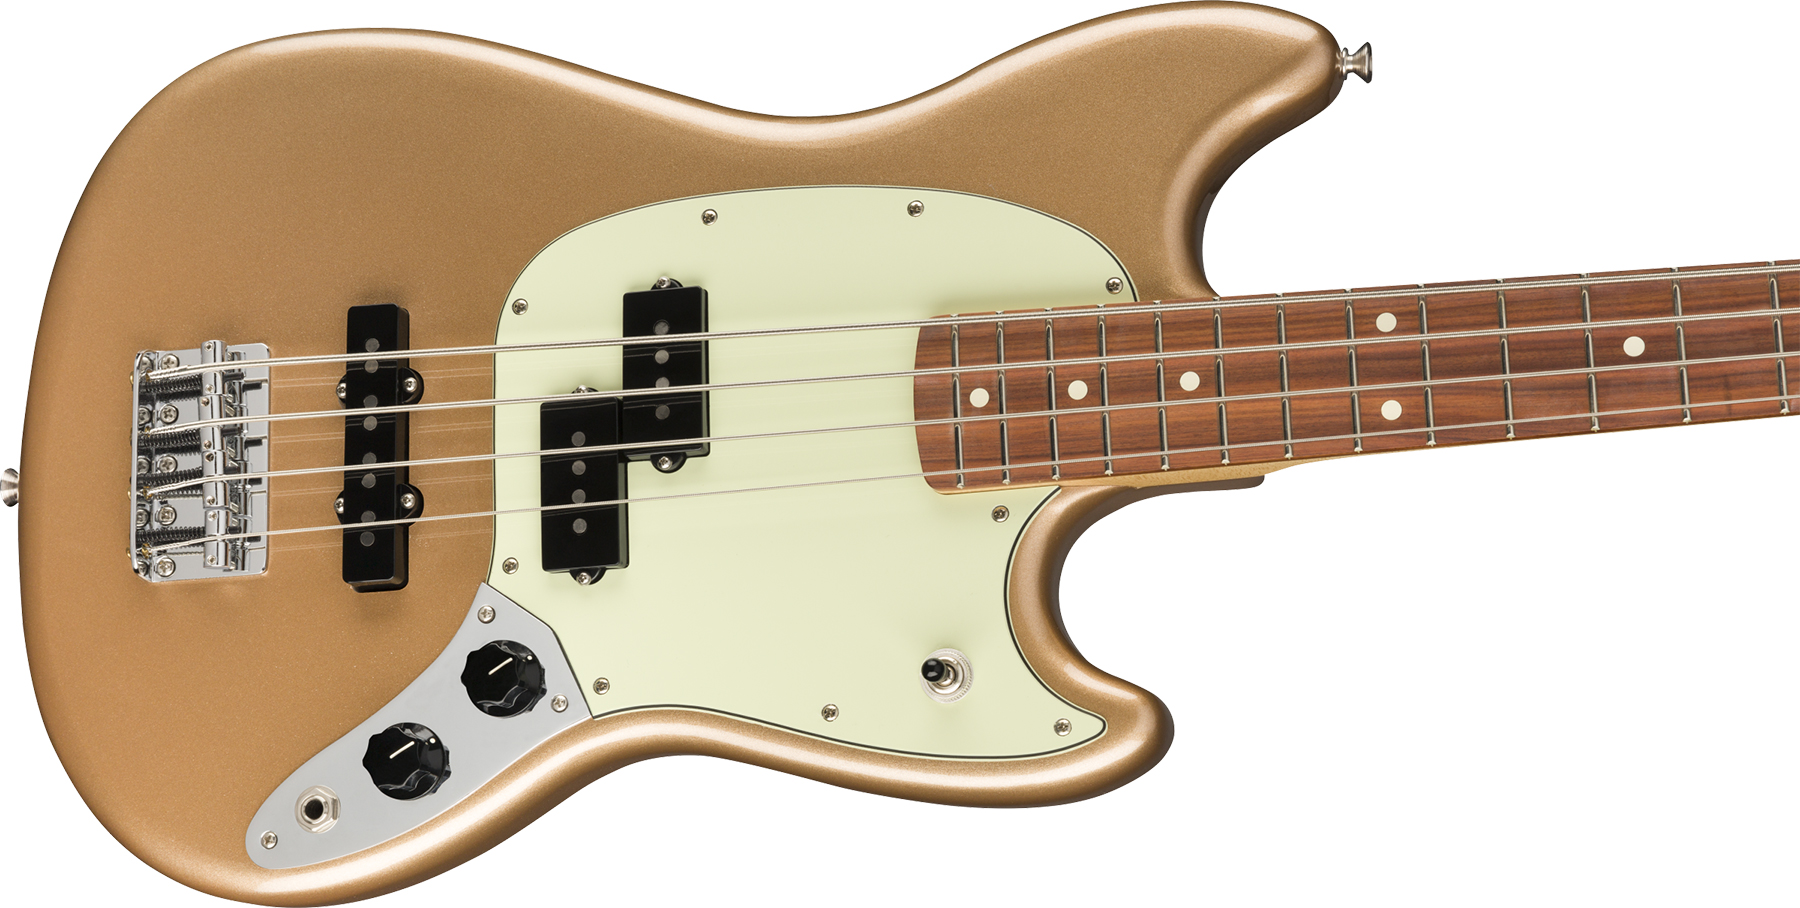 Fender Player Mustang Bass Mex Pf - Firemist Gold - Electric bass for kids - Variation 2